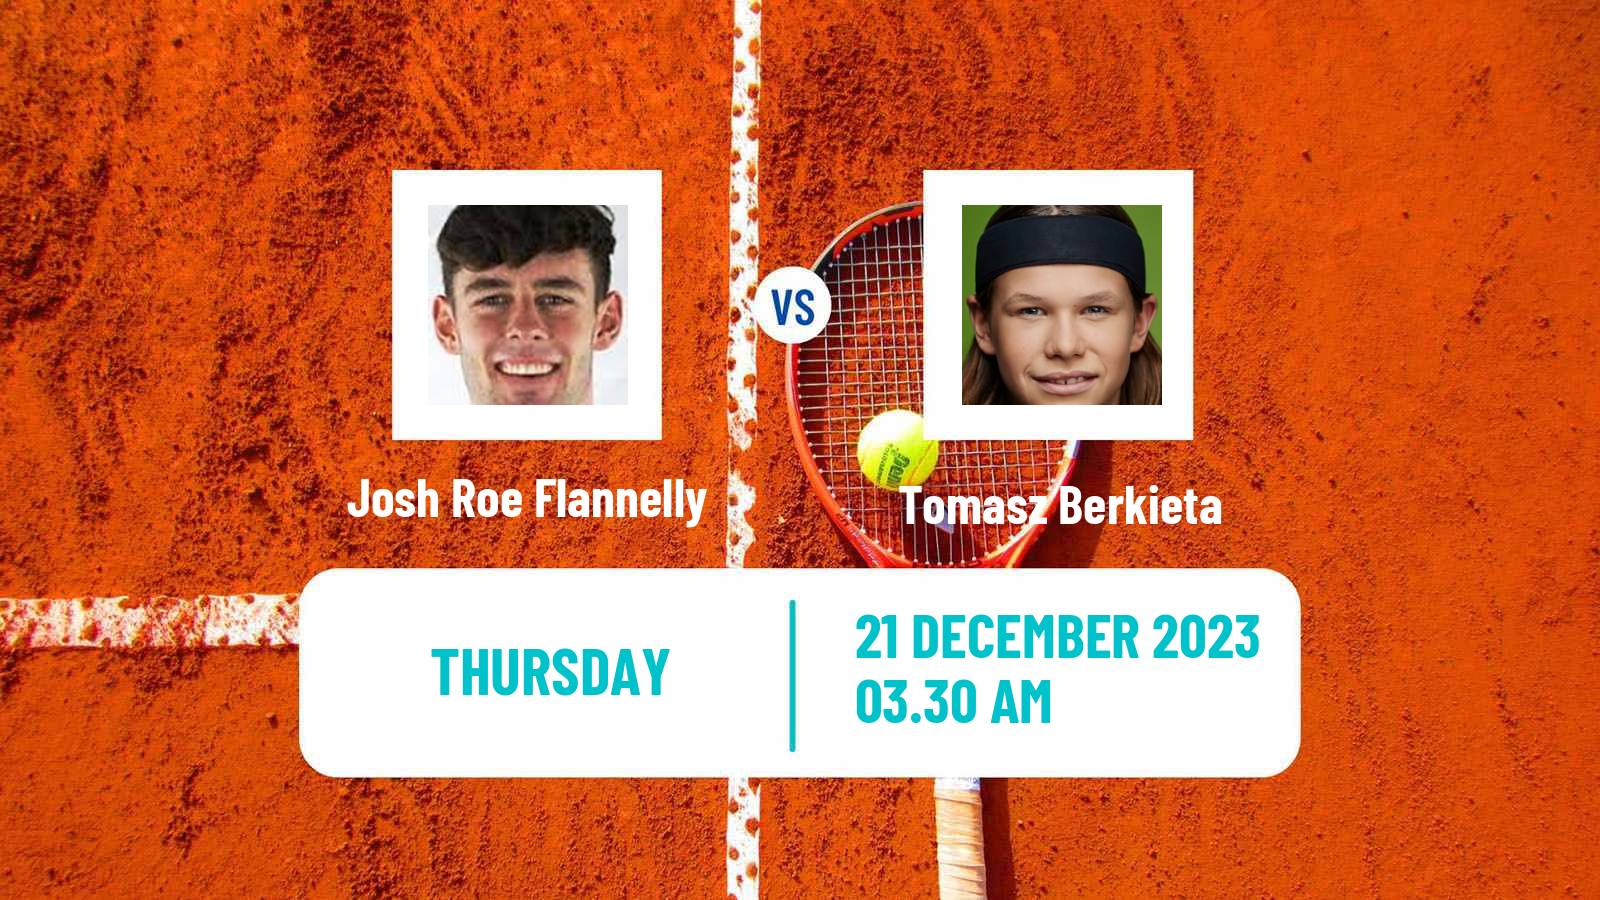 Tennis ITF M15 Monastir 51 Men 2023 Josh Roe Flannelly - Tomasz Berkieta